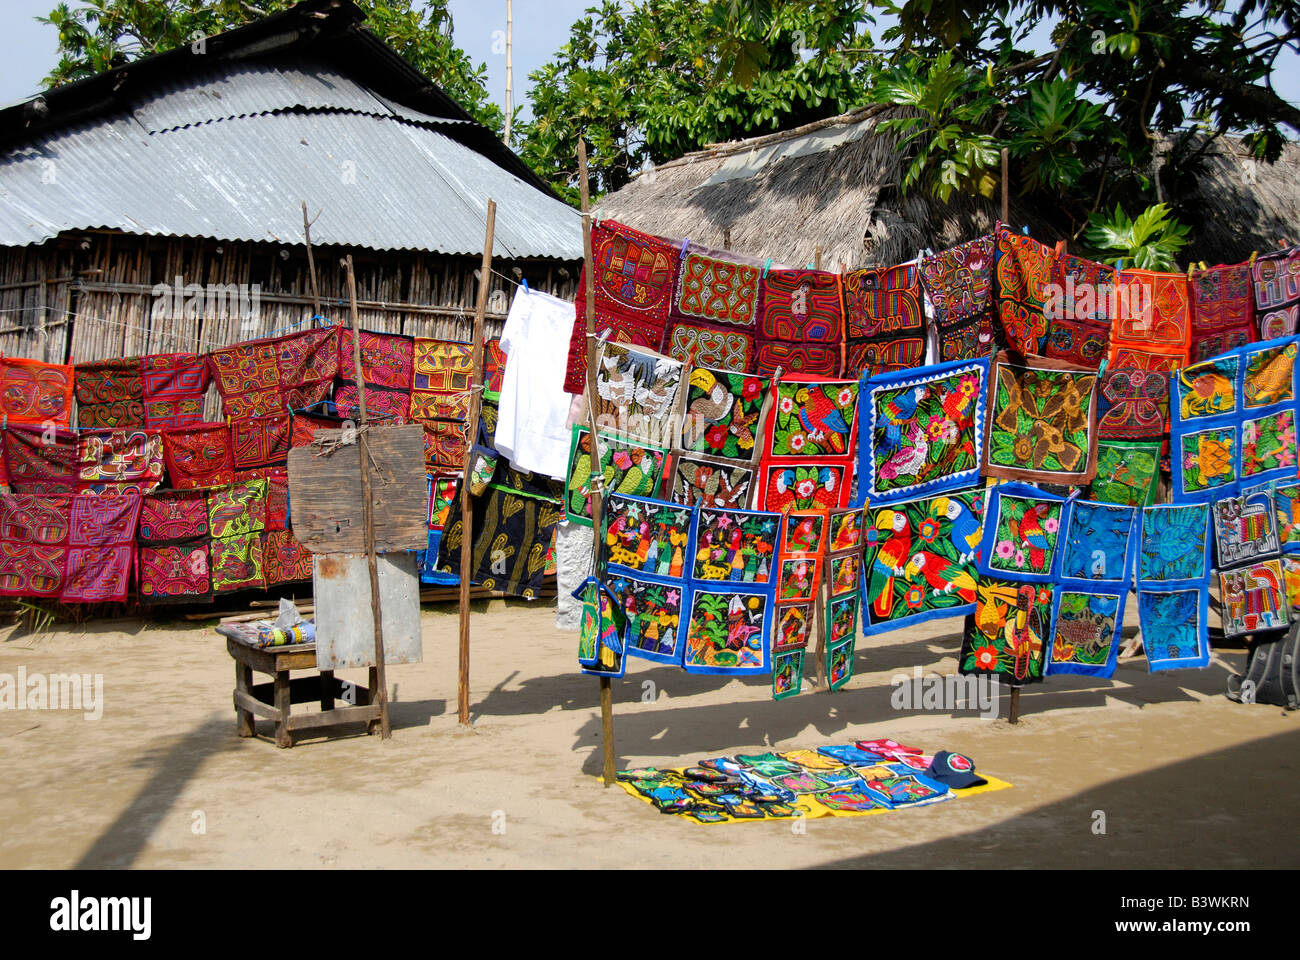 Central America, Panama, San Blas Islands (aka Kuna Yala). Colorful Kuna Indian hand stitched molas on display. Stock Photo